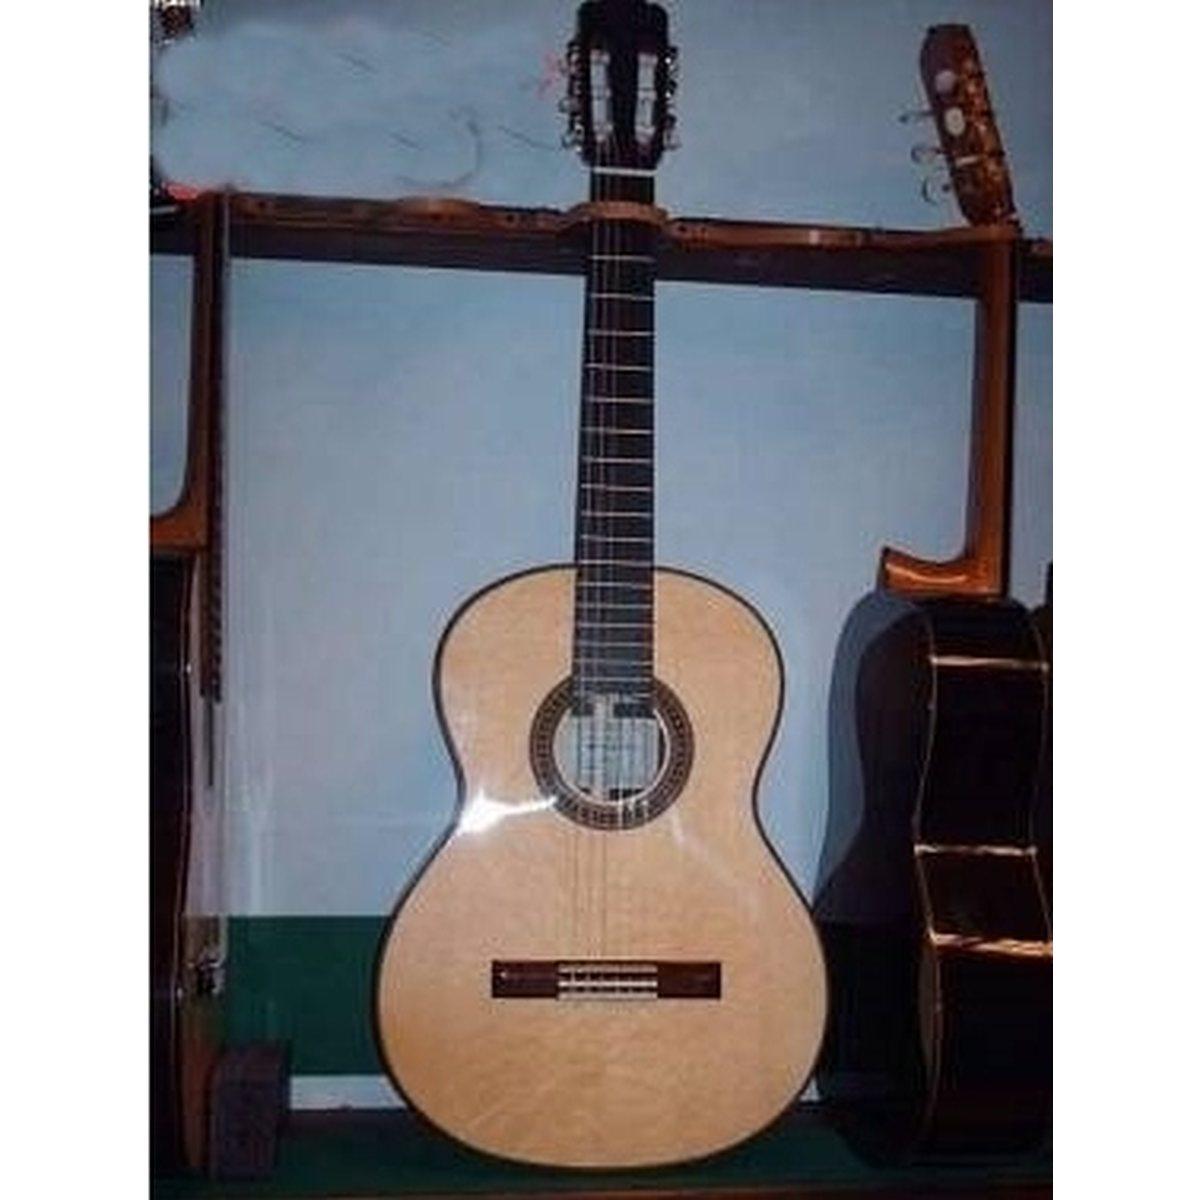 Barrios concert abete chitarra classica